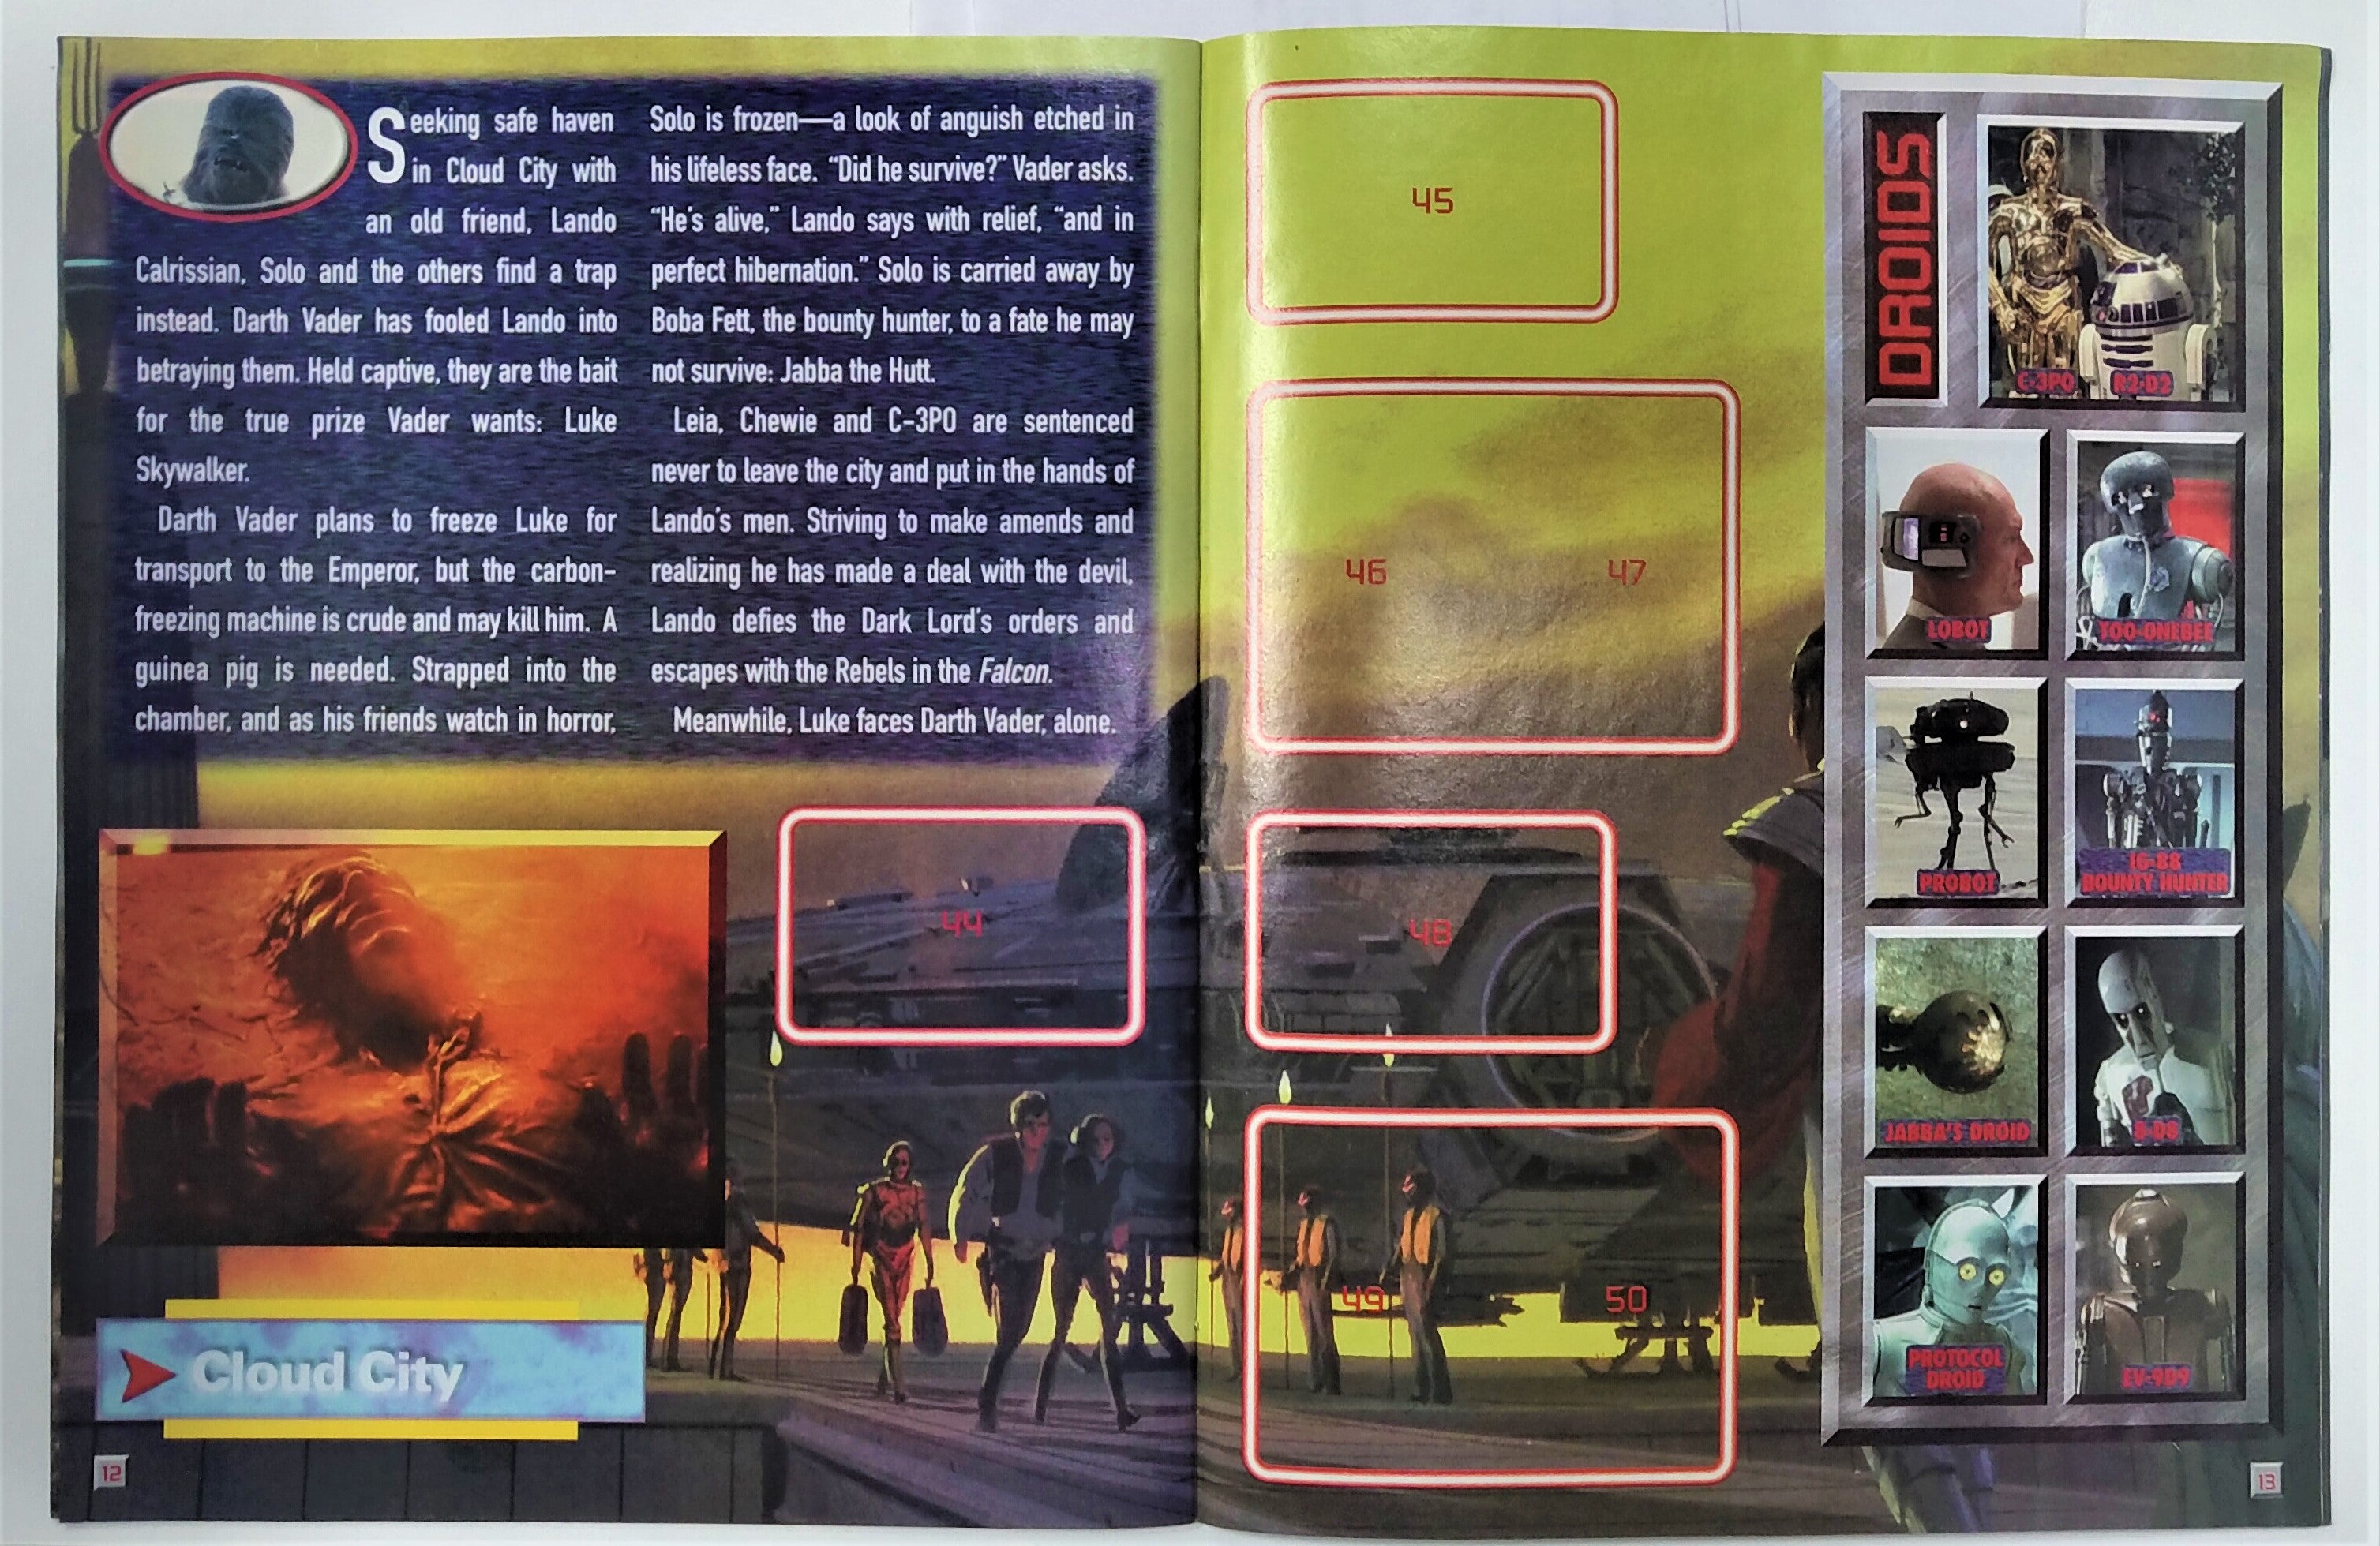 1996 Panini Skybox Star Wars Collectible Sticker Album - Miraj Trading